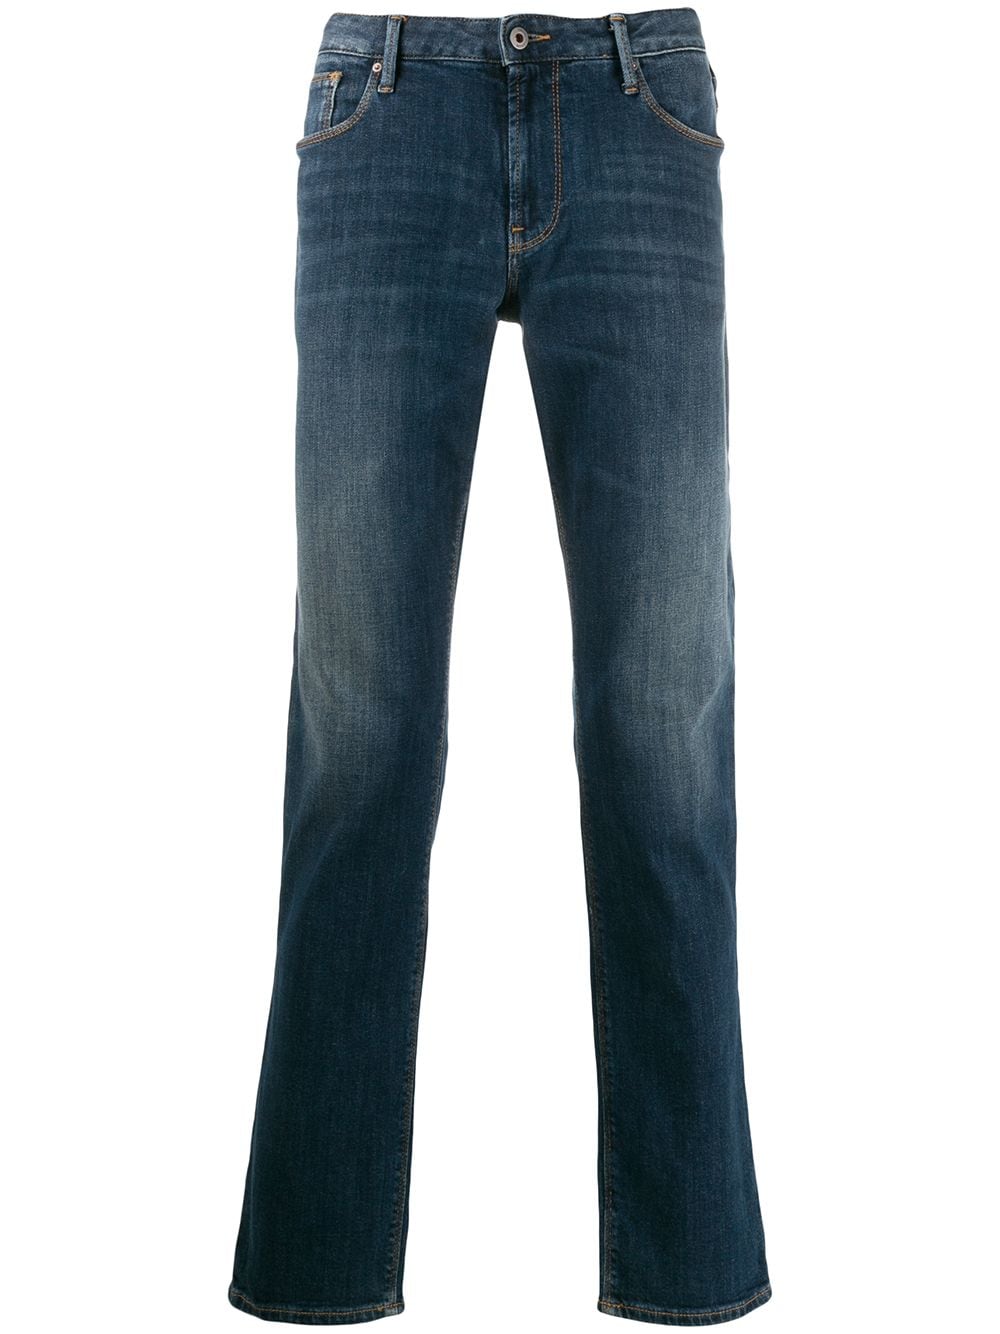 armani j06 jeans sale